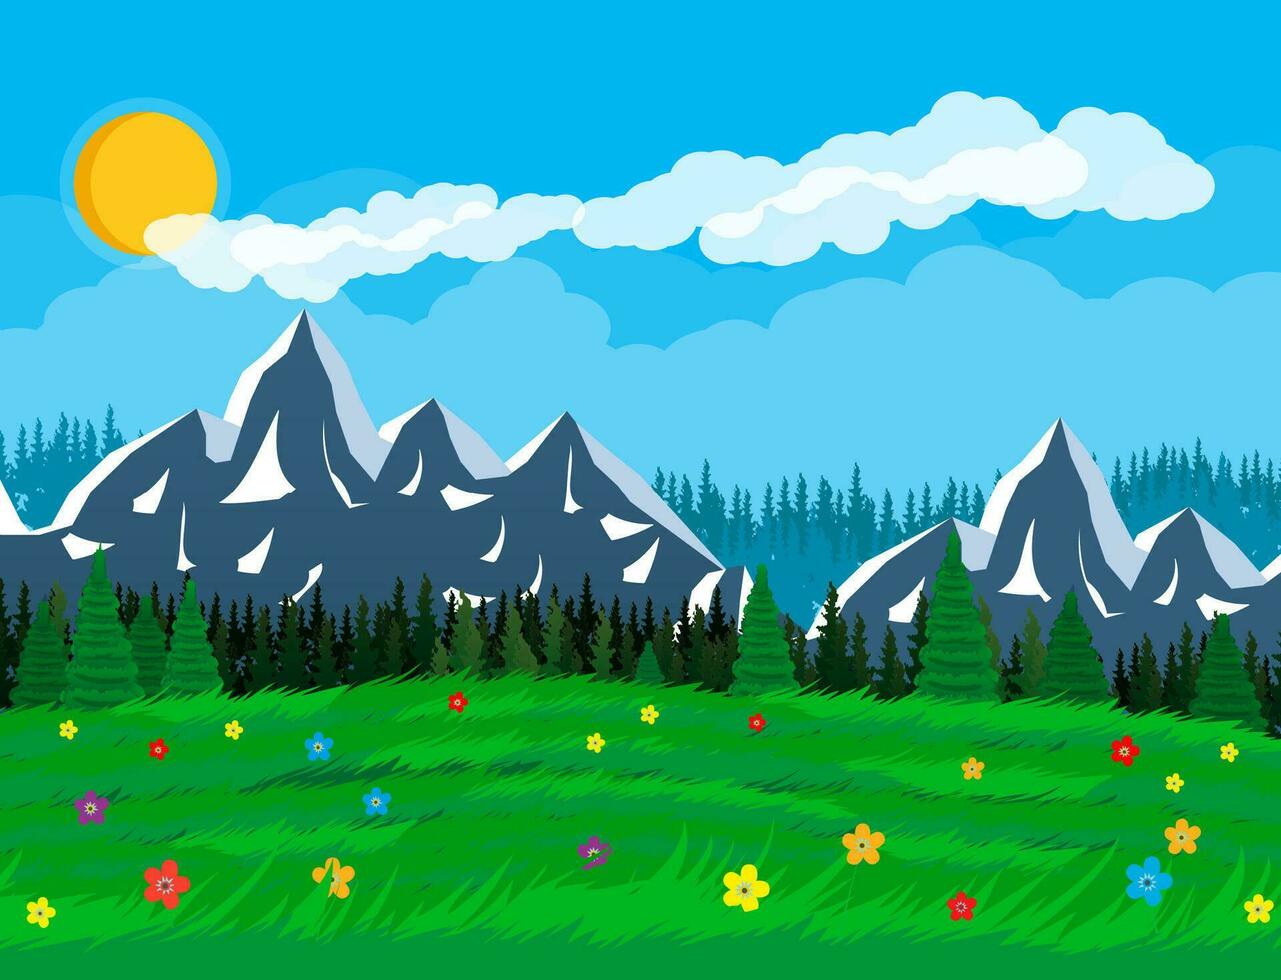 Sommer- Natur Landschaft mit Berge, Wald, Gras, Blume, Himmel, Sonne und Wolken. National Park. Vektor Illustration im eben Stil